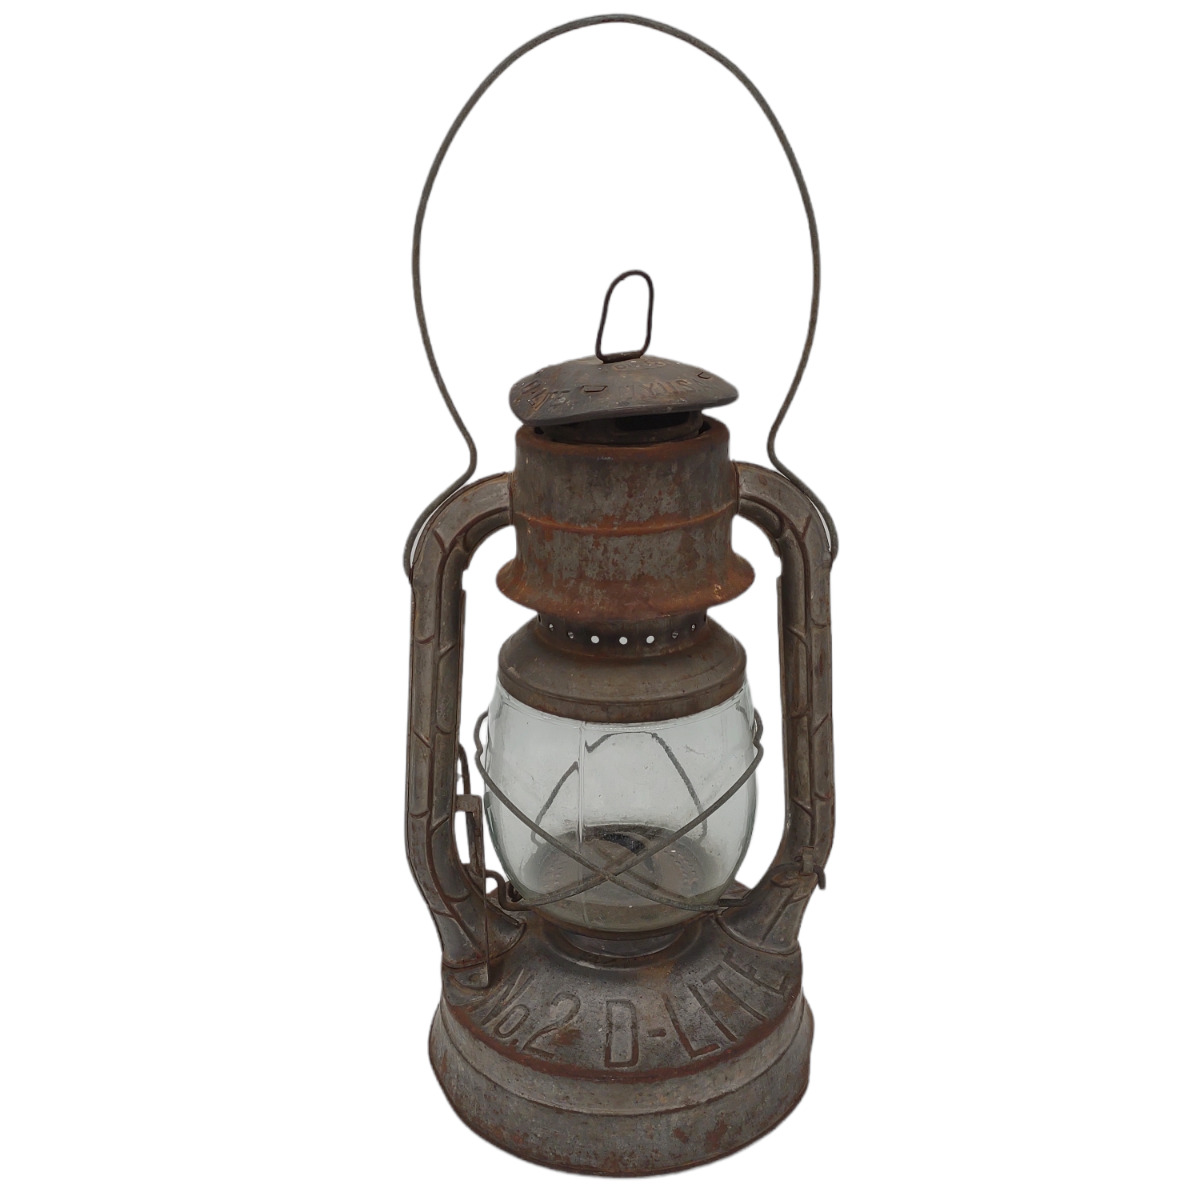 Antique Lantern Dietz No 2 D-LITE Railroad Barn Farm Country Lamp Light NY USA